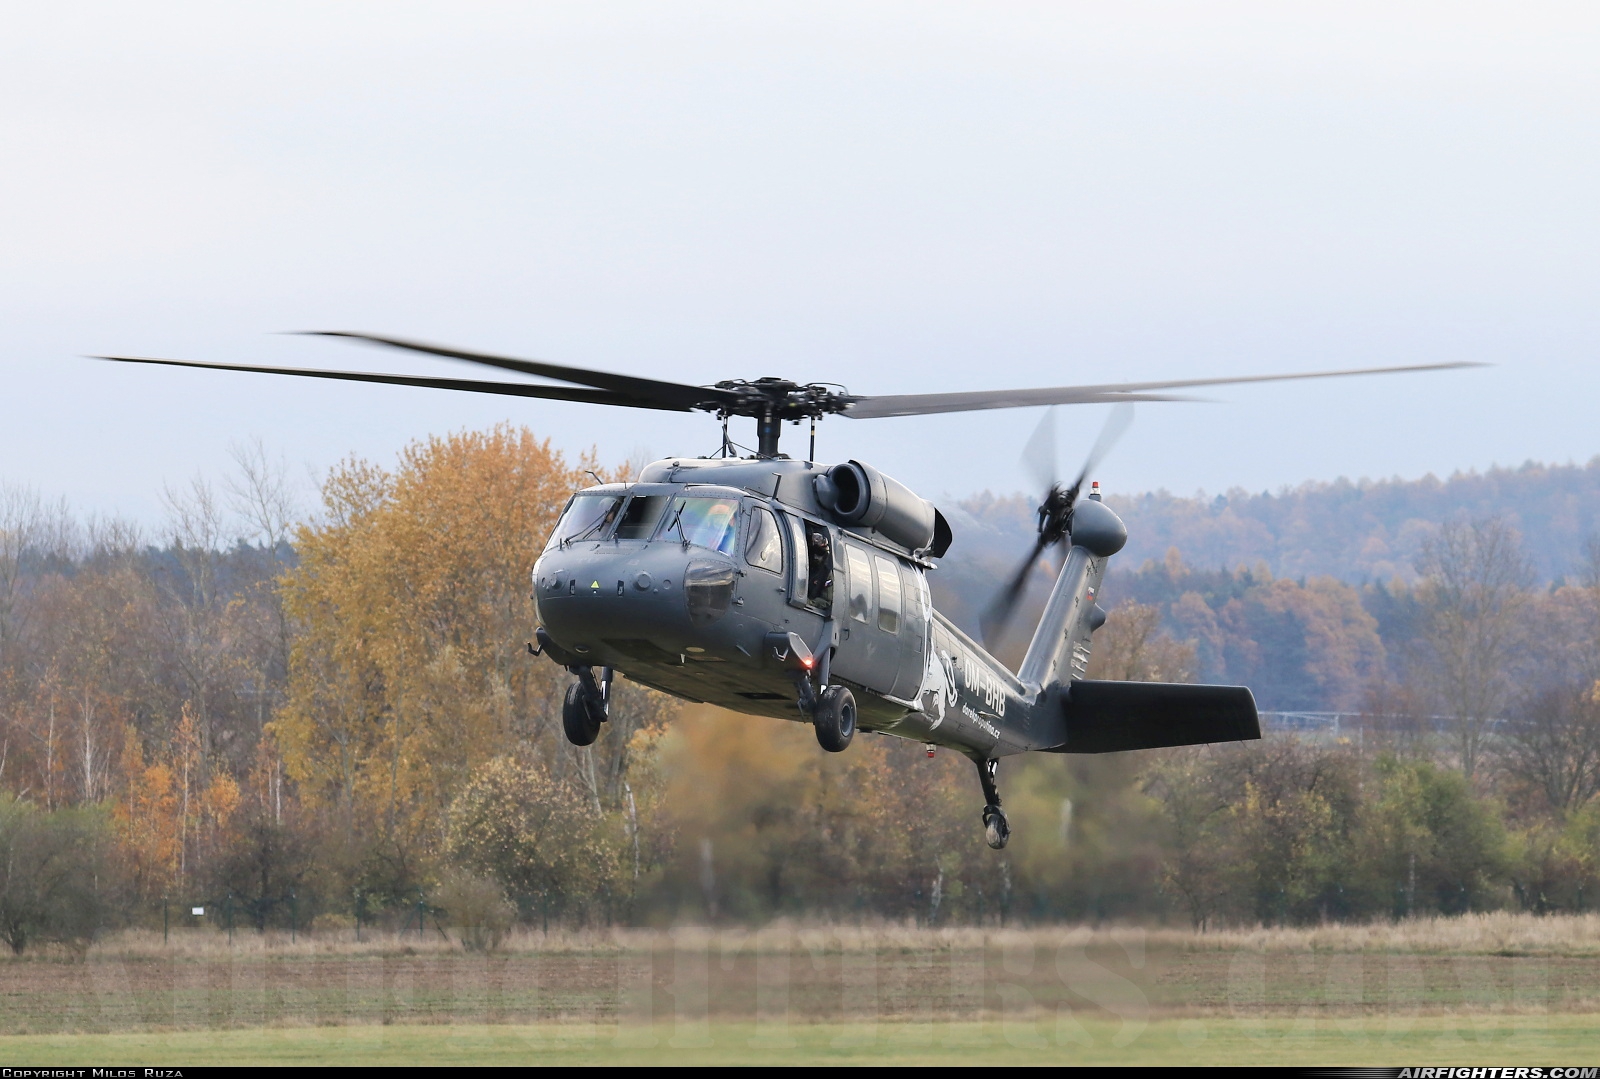 Company Owned - Slovak Training Academy Sikorsky UH-60M Black Hawk (S-70A) OM-BHB at Hradec Kralove (LKHK), Czech Republic